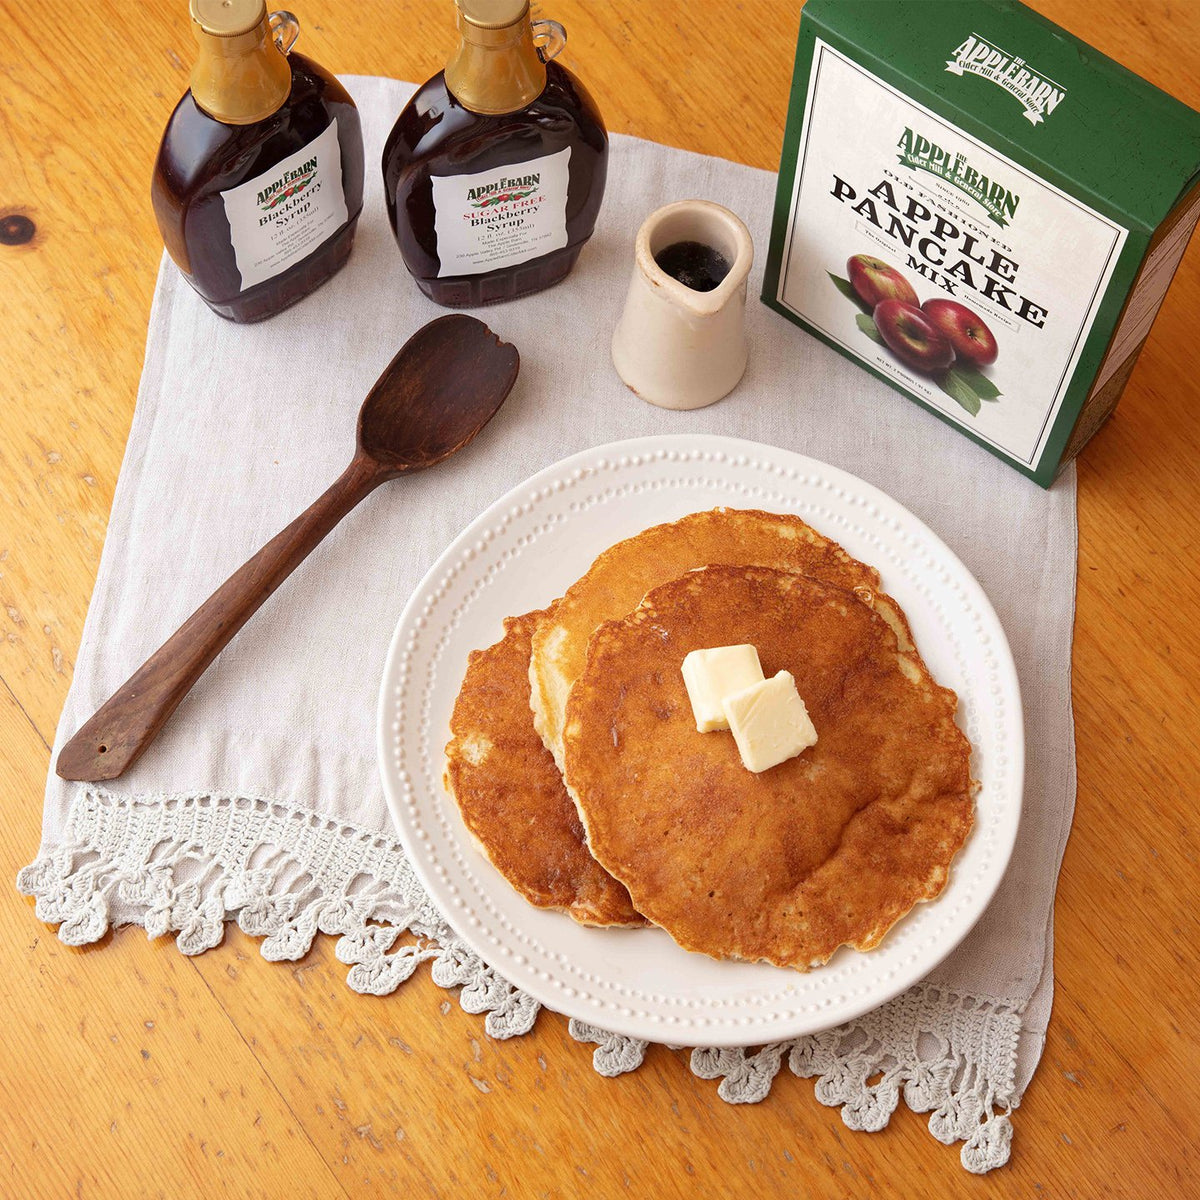 Blackberry syrup on apple pancakes